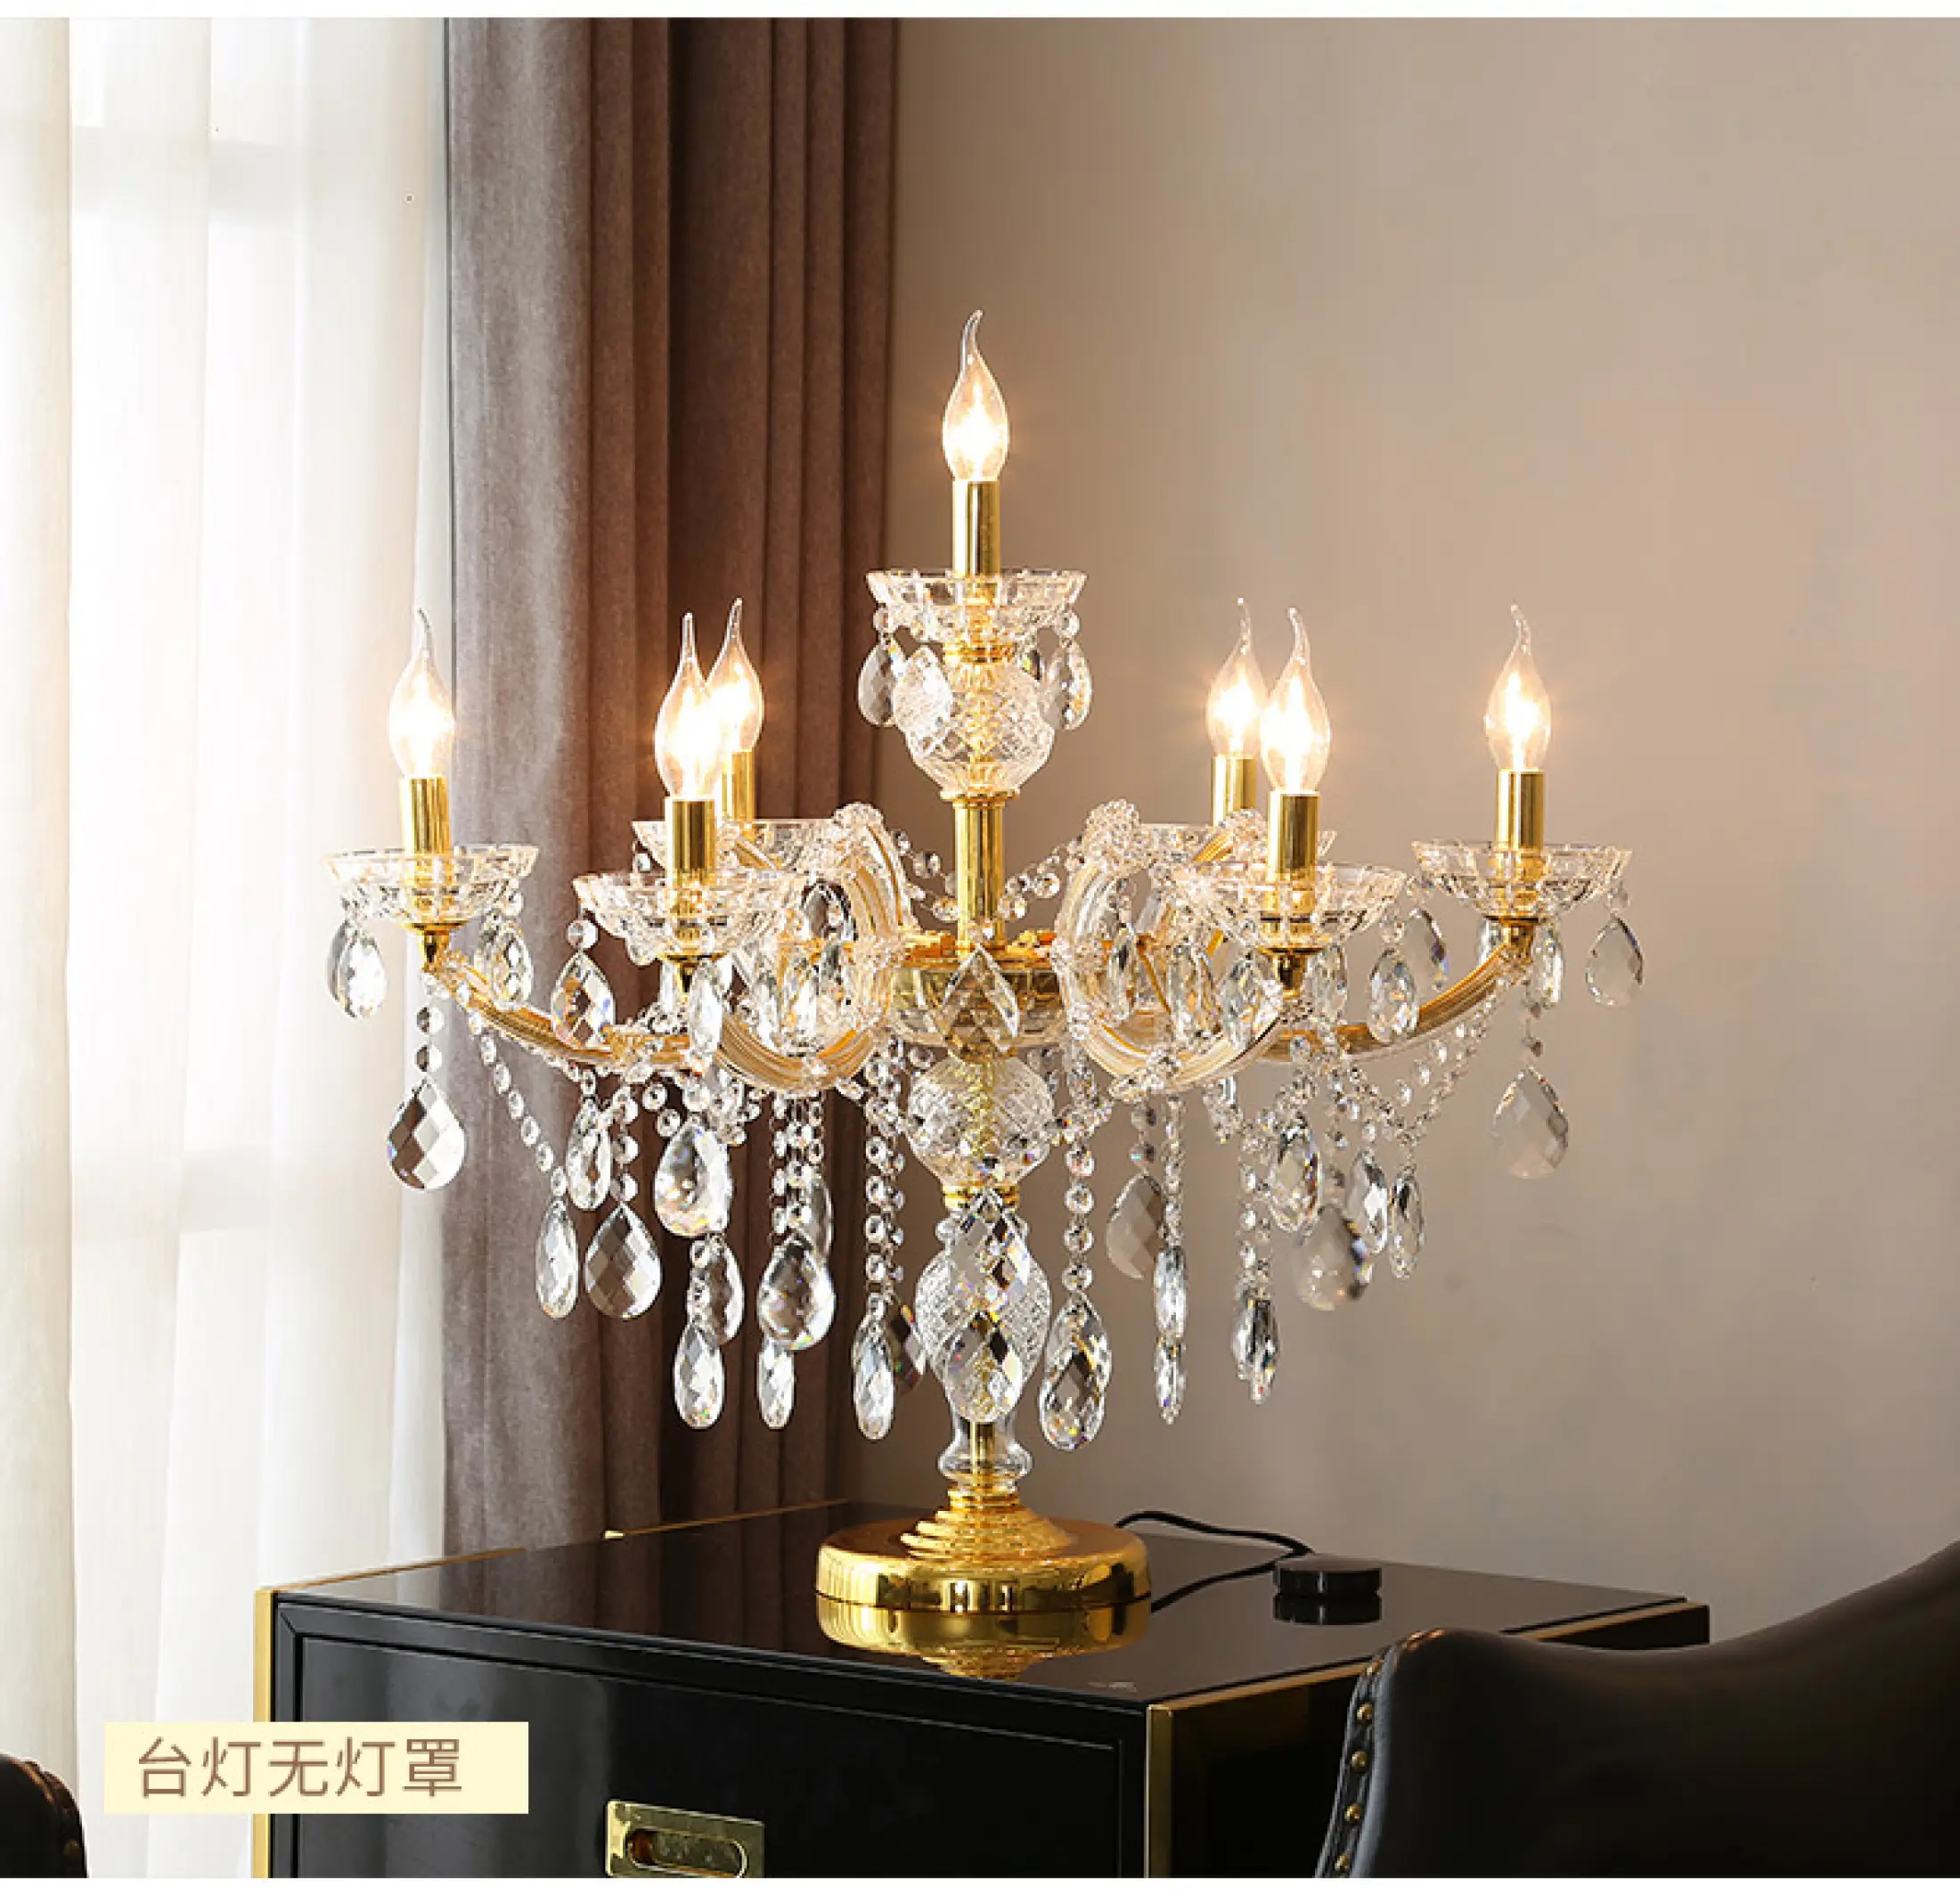 Bedside Decorative Lamp Lazada Singapore, Crystal Candle Chandelier Standard Sizes